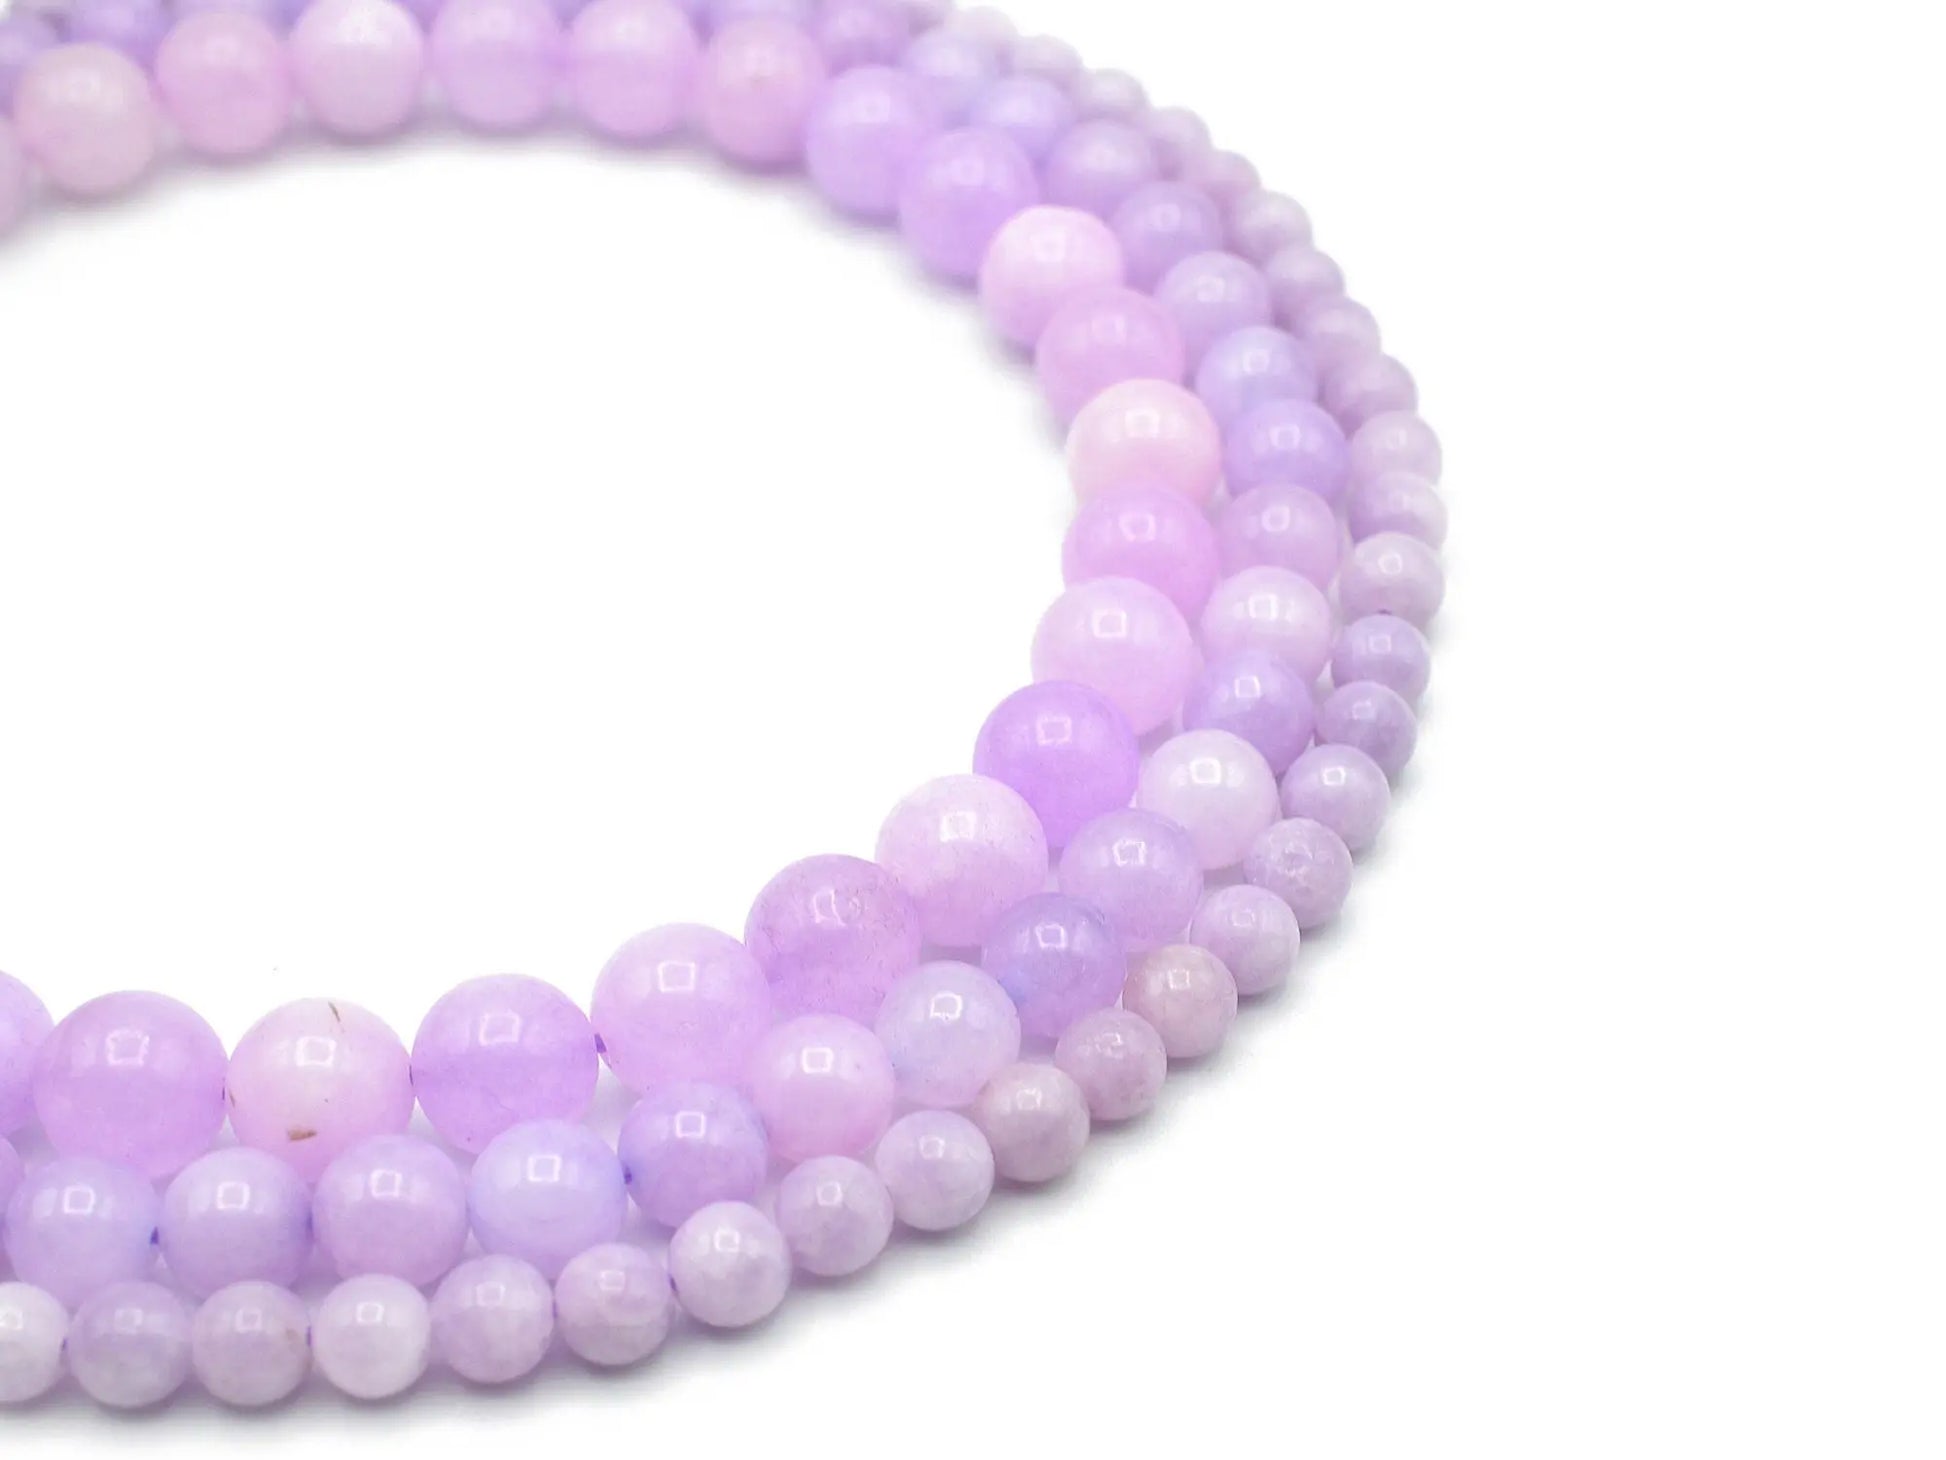 Purple kunzite gemstone round beads 6mm/8mm/10mm natural stones beads natural healing stone chakra stones for jewelry making aa quality - BeadsFindingDepot